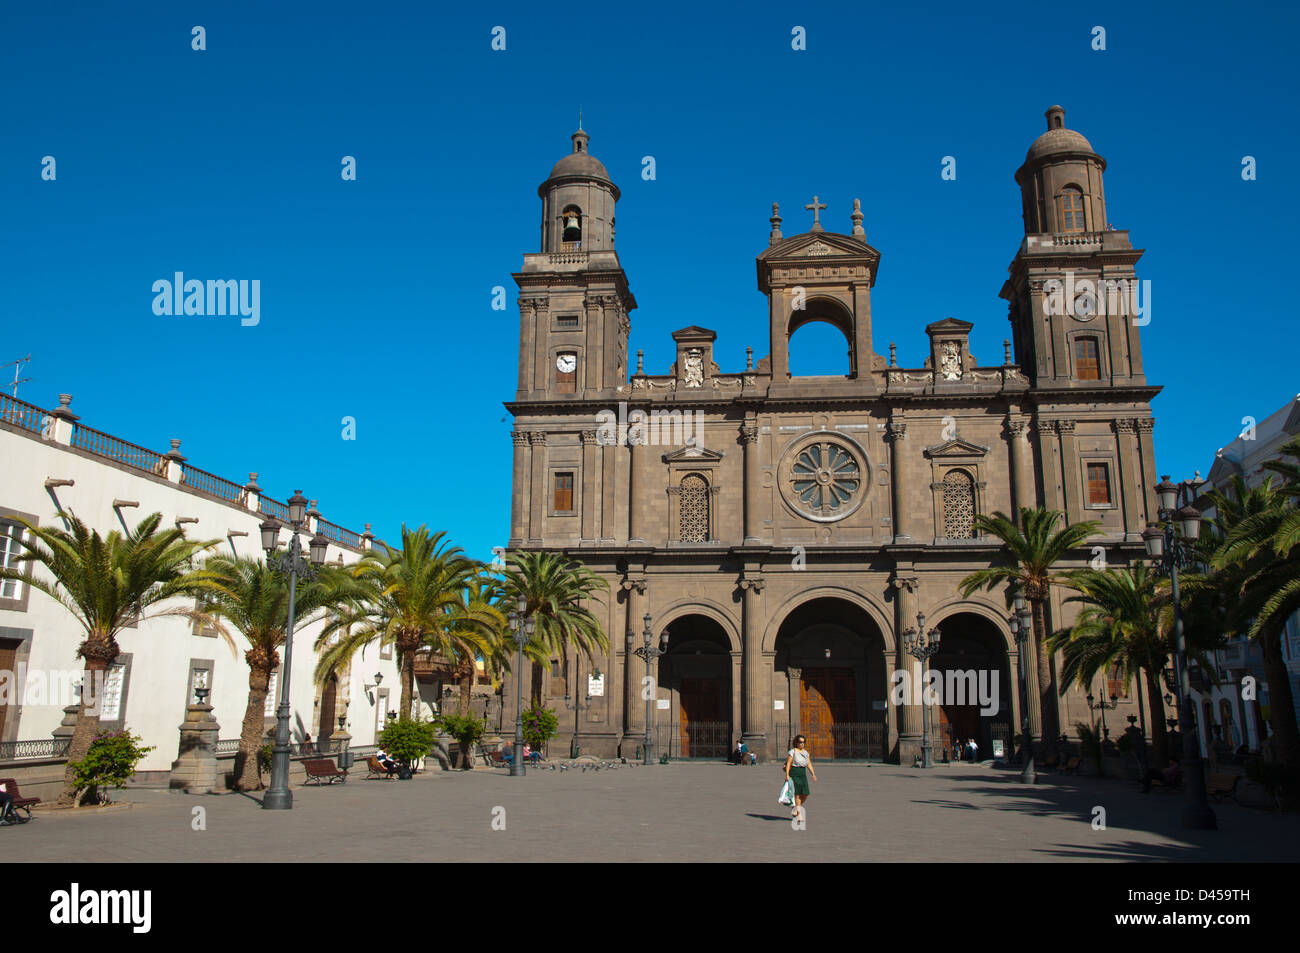 Plaza de Santa Ana square Vegueta district Las Palmas de Gran Canaria city Gran Canaria island the Canary Islands Spain Europe Stock Photo